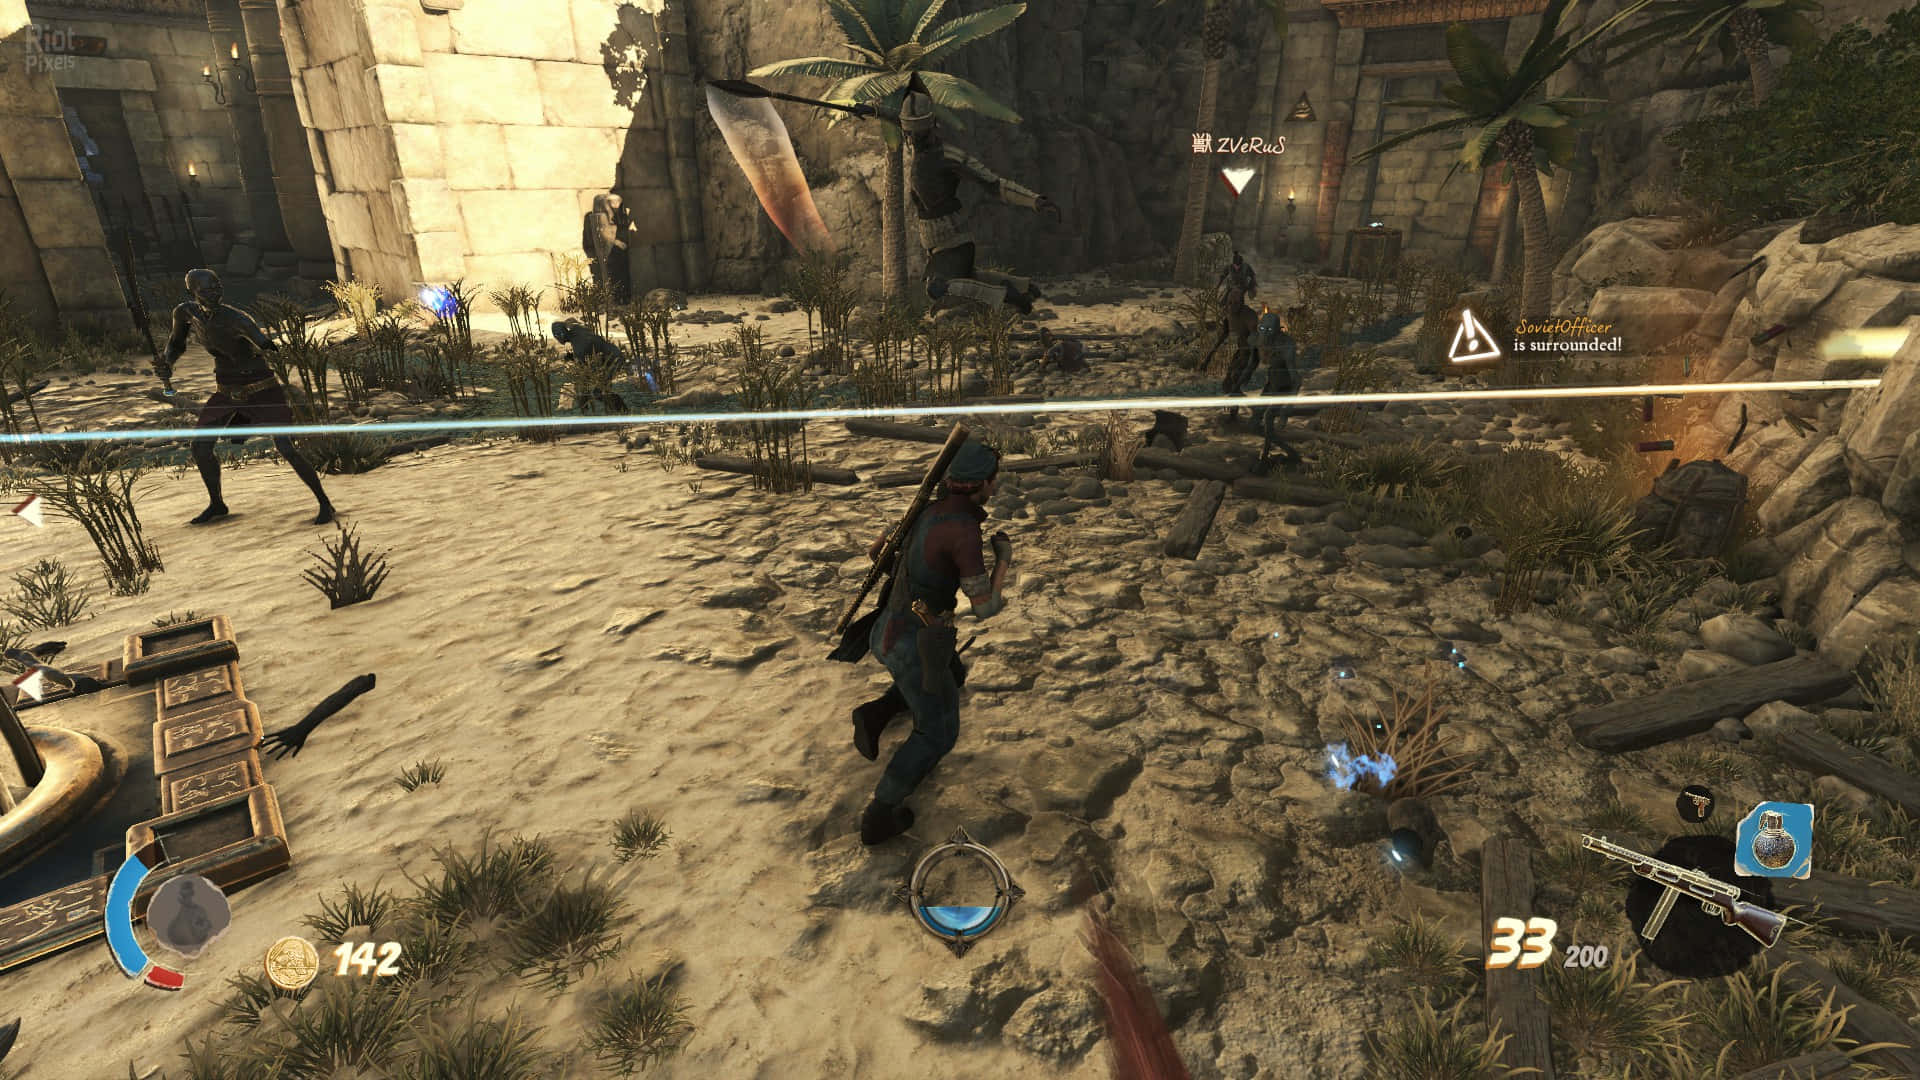 A Screenshot Of A Video Game Showing A Man In A Desert